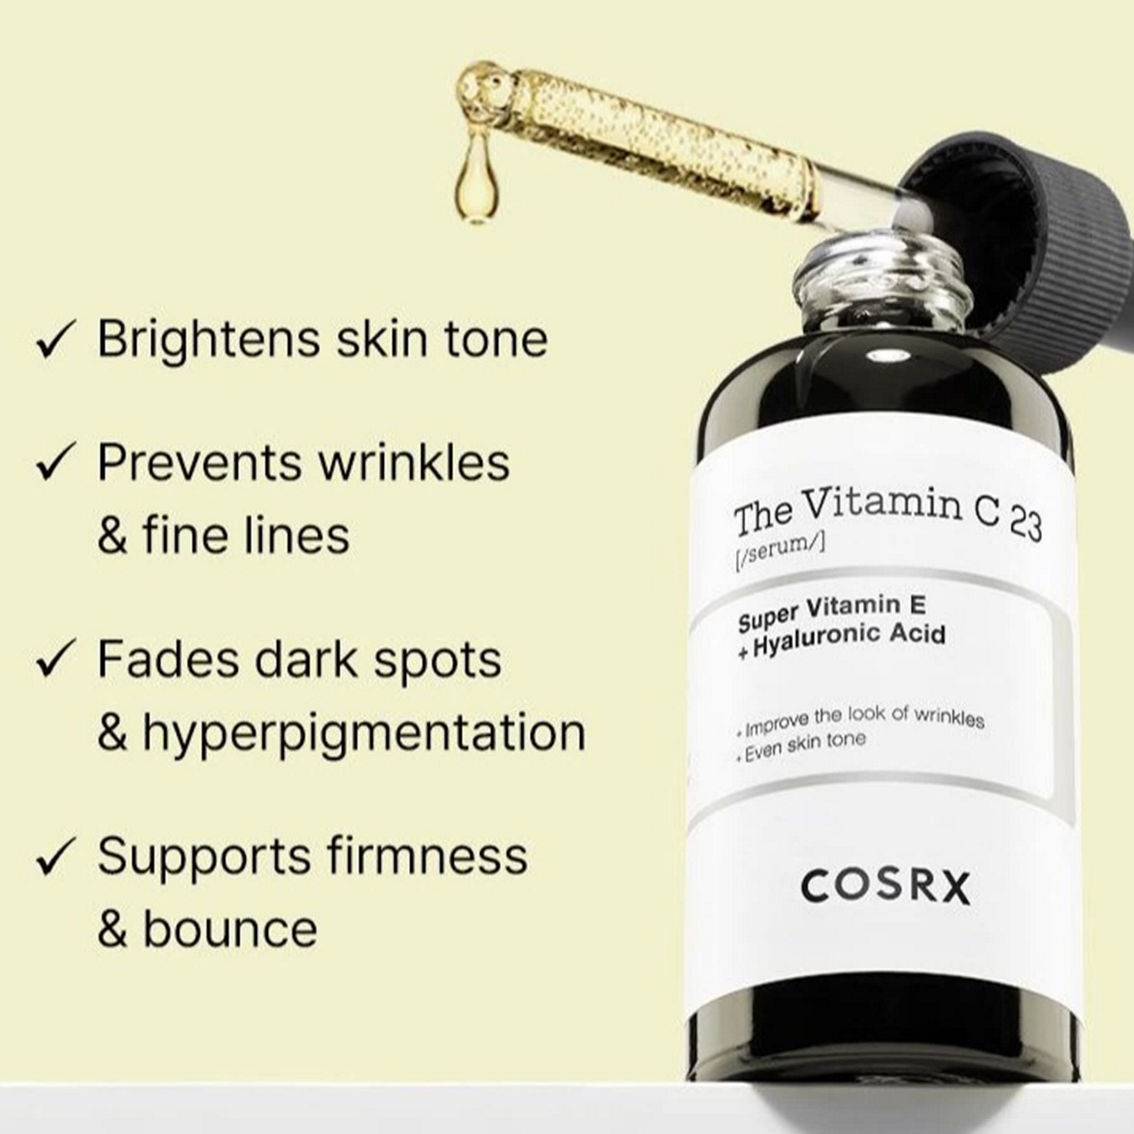 COSRX The Vitamin C 23 Serum 20 g - Image 4 of 5